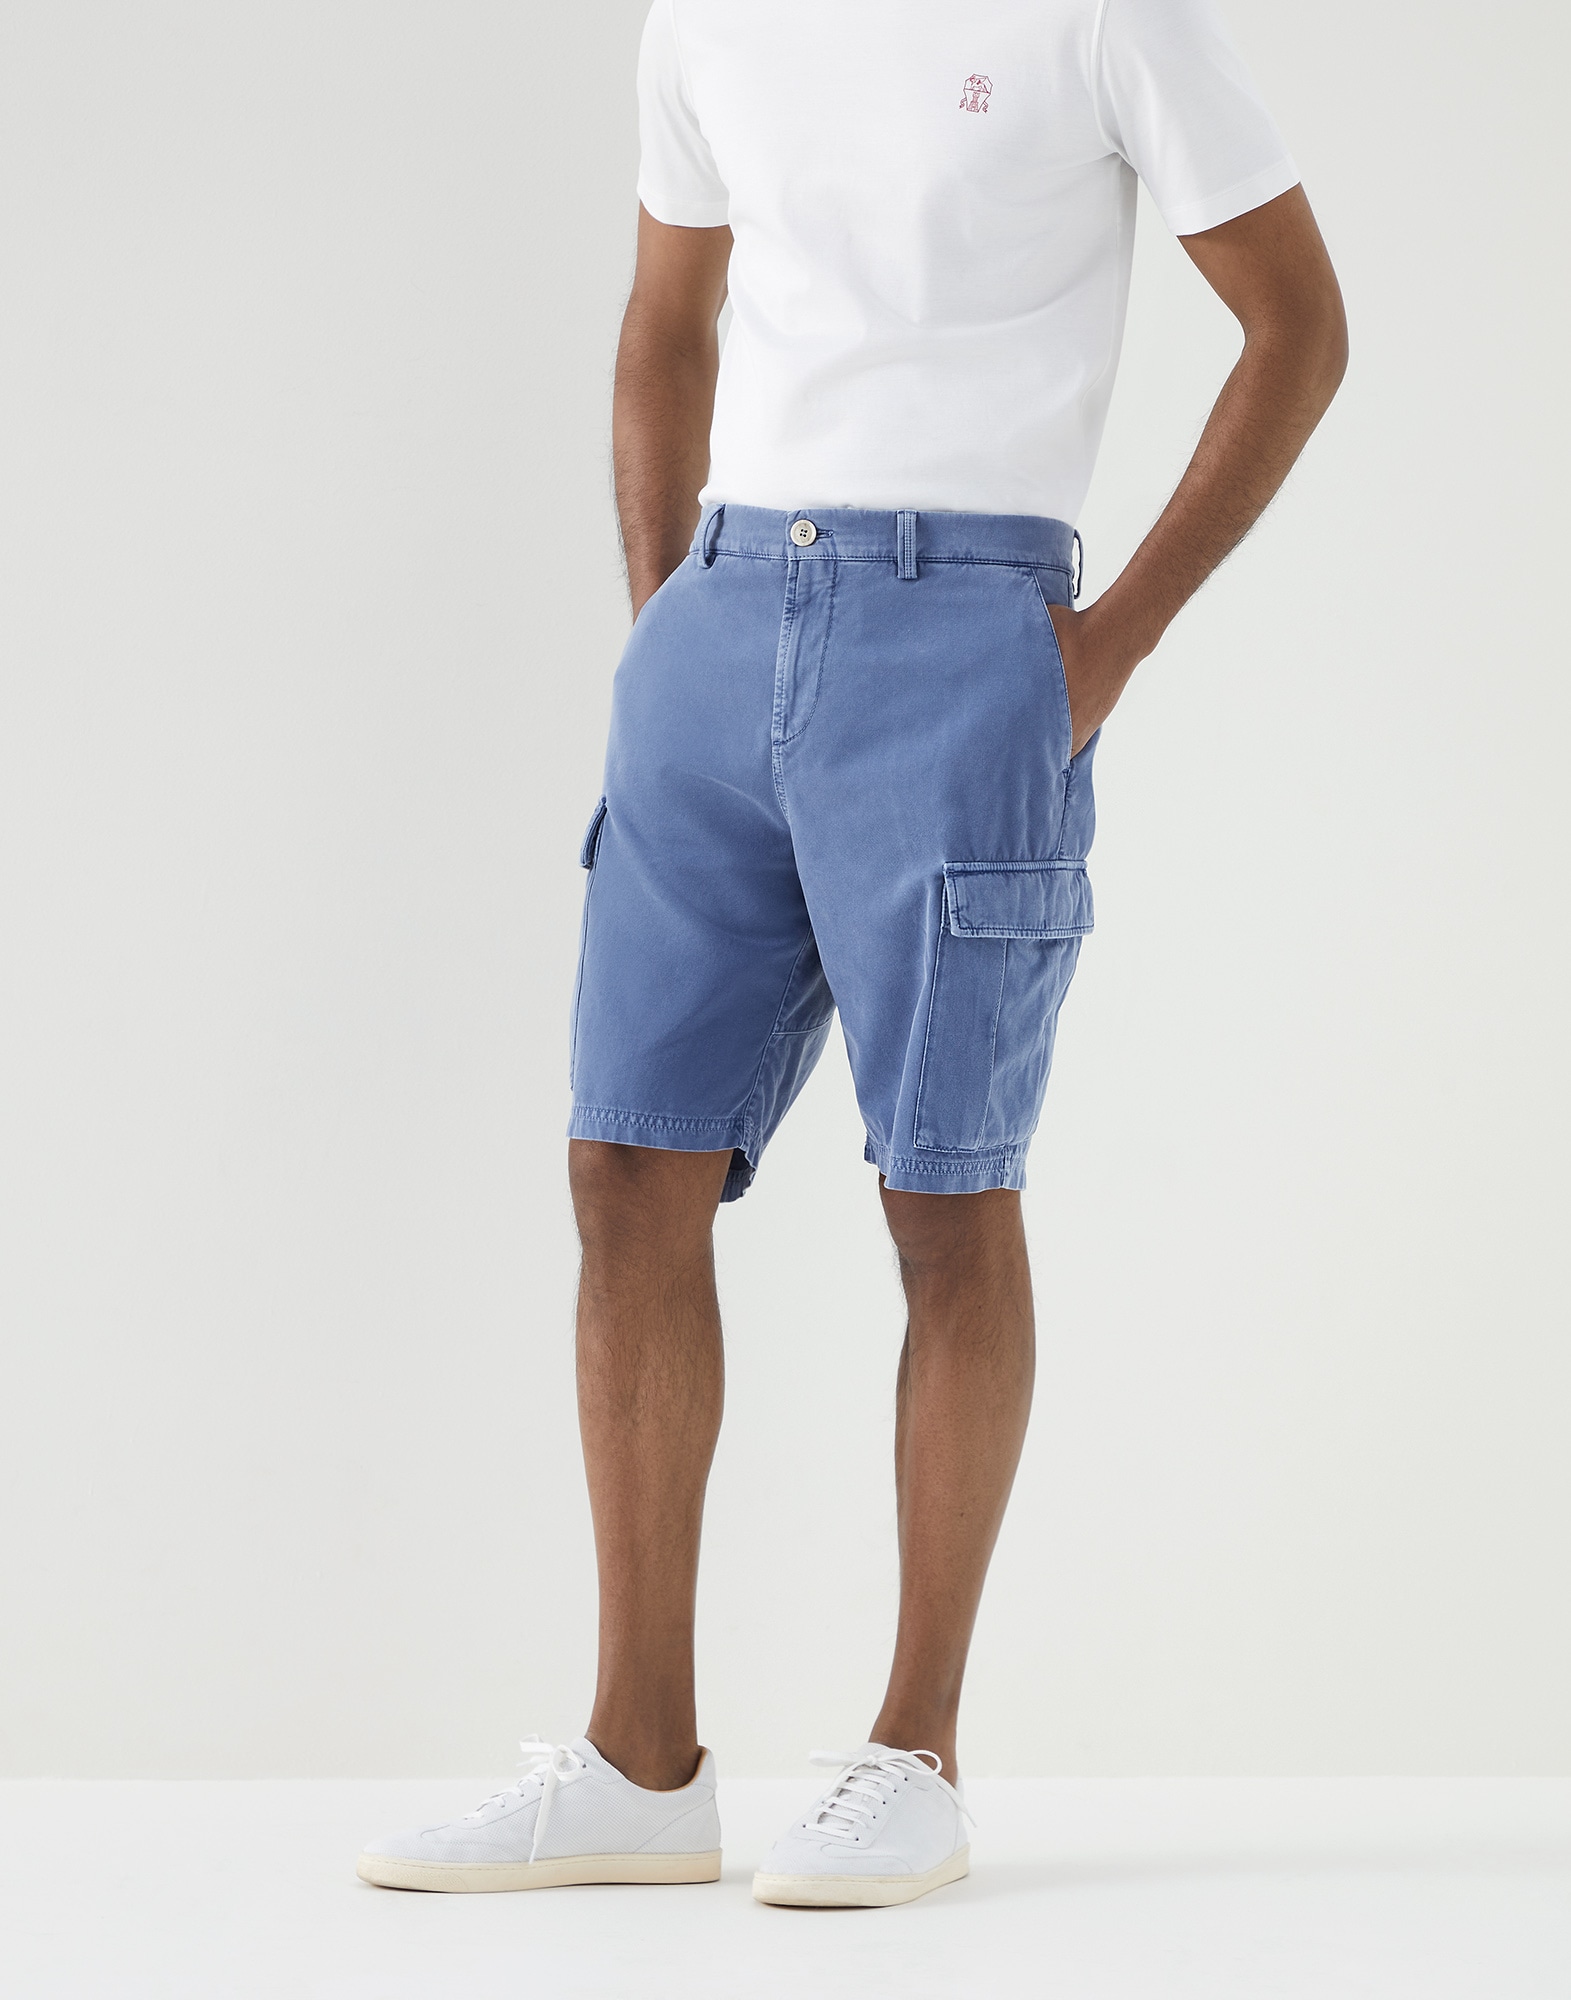 Men's pants bermuda shorts | Cucinelli